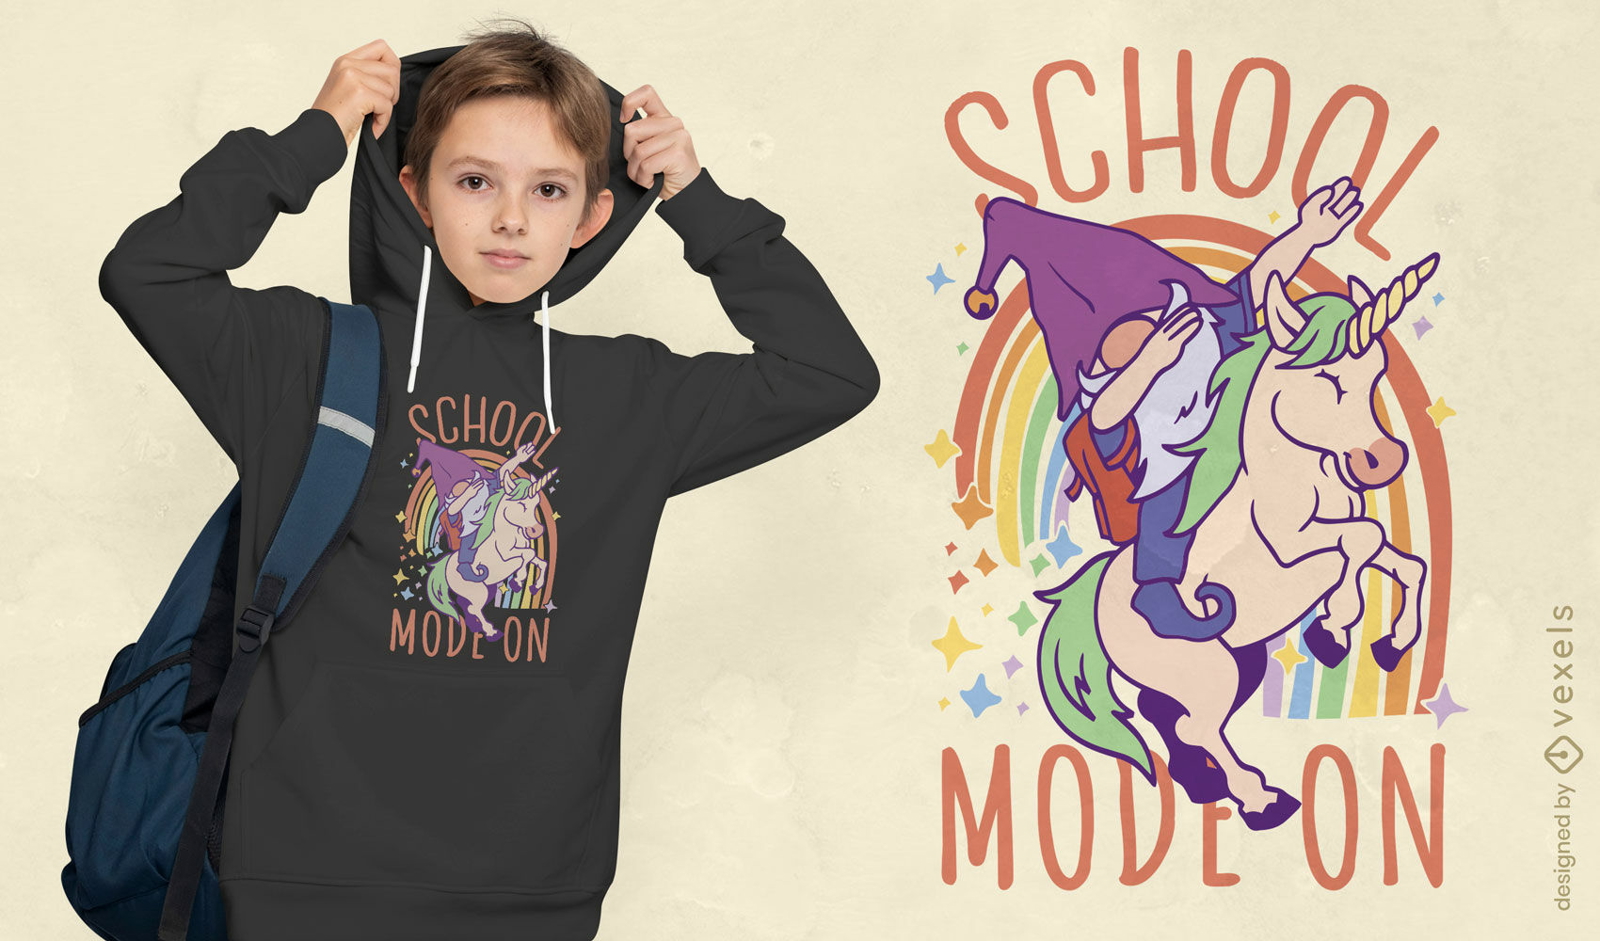 Dise?o de camiseta de gnomo y unicornio escolar.